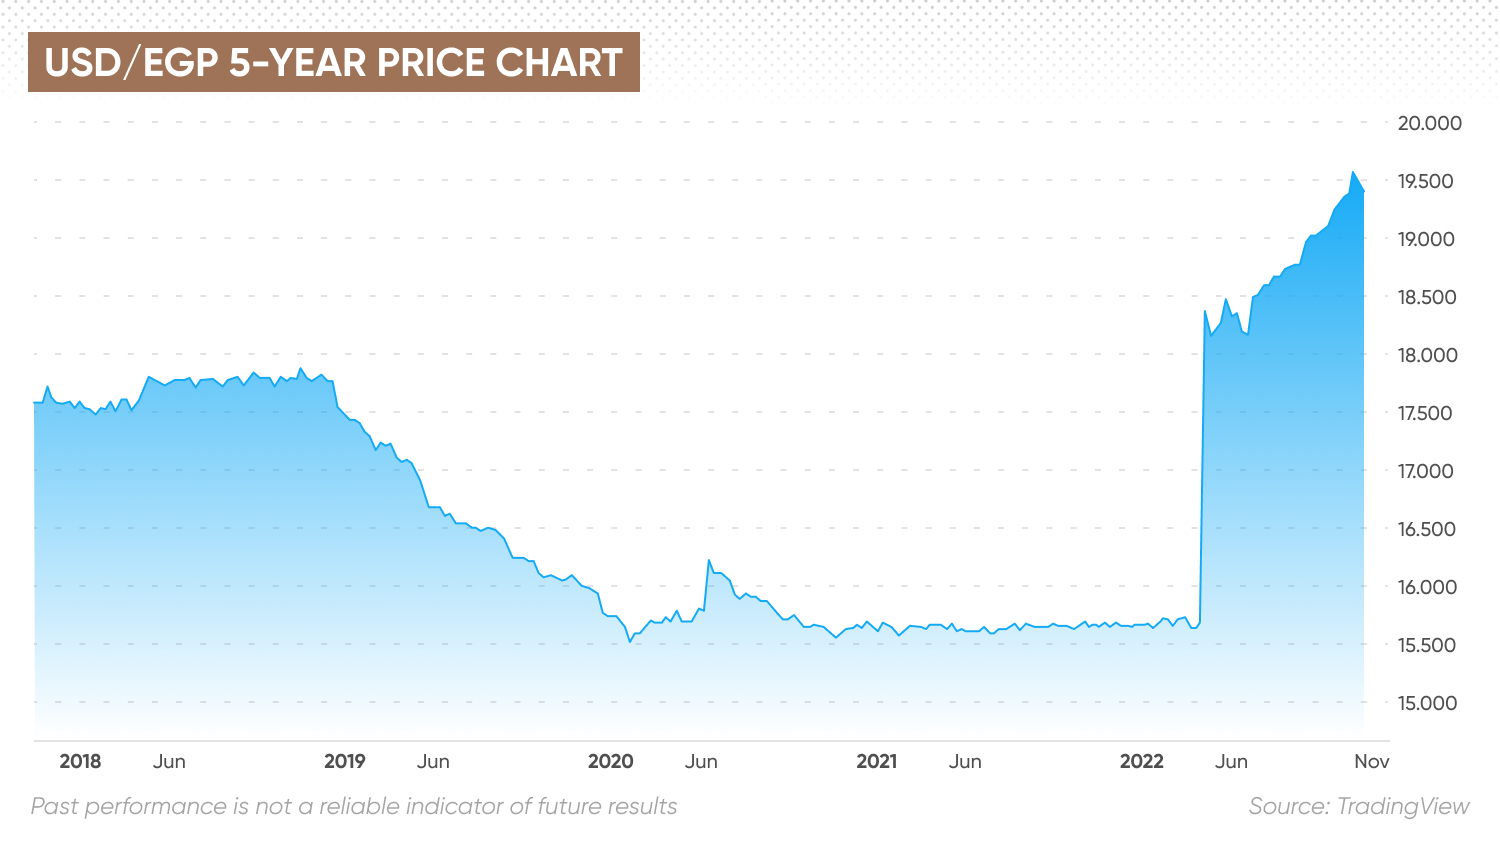 USD/EGP 5-year price chart